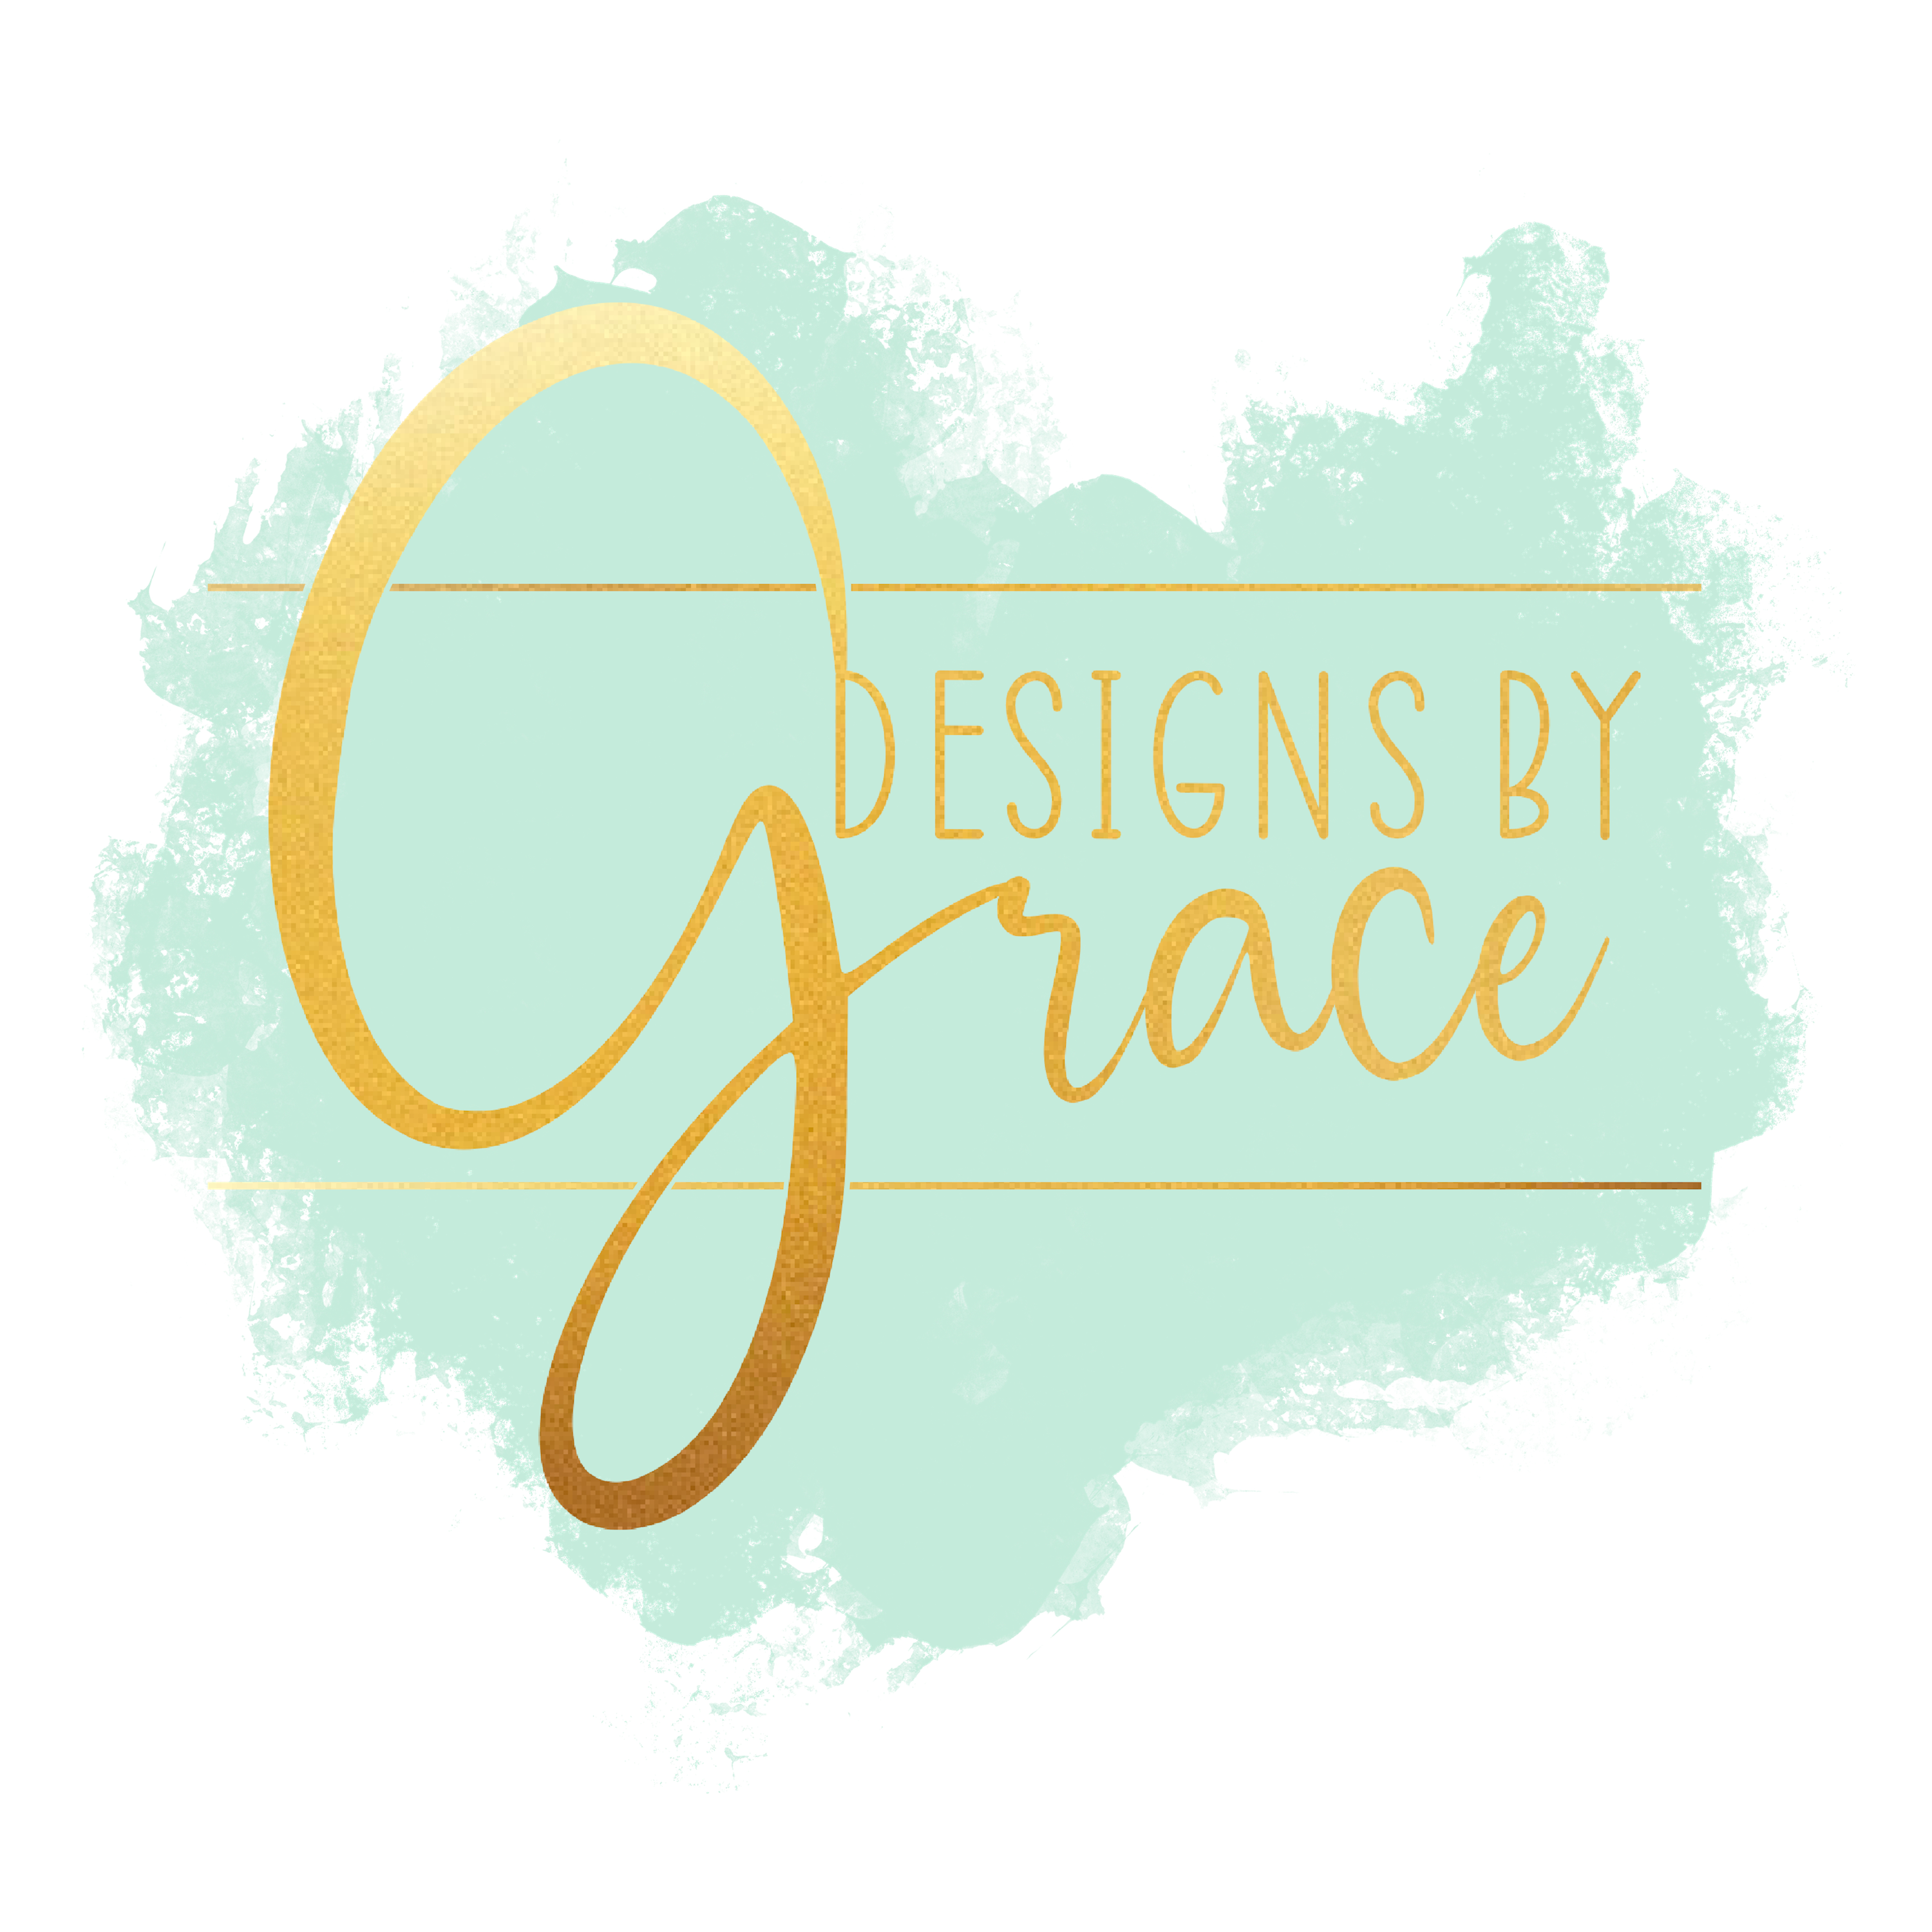 Designs by Grace